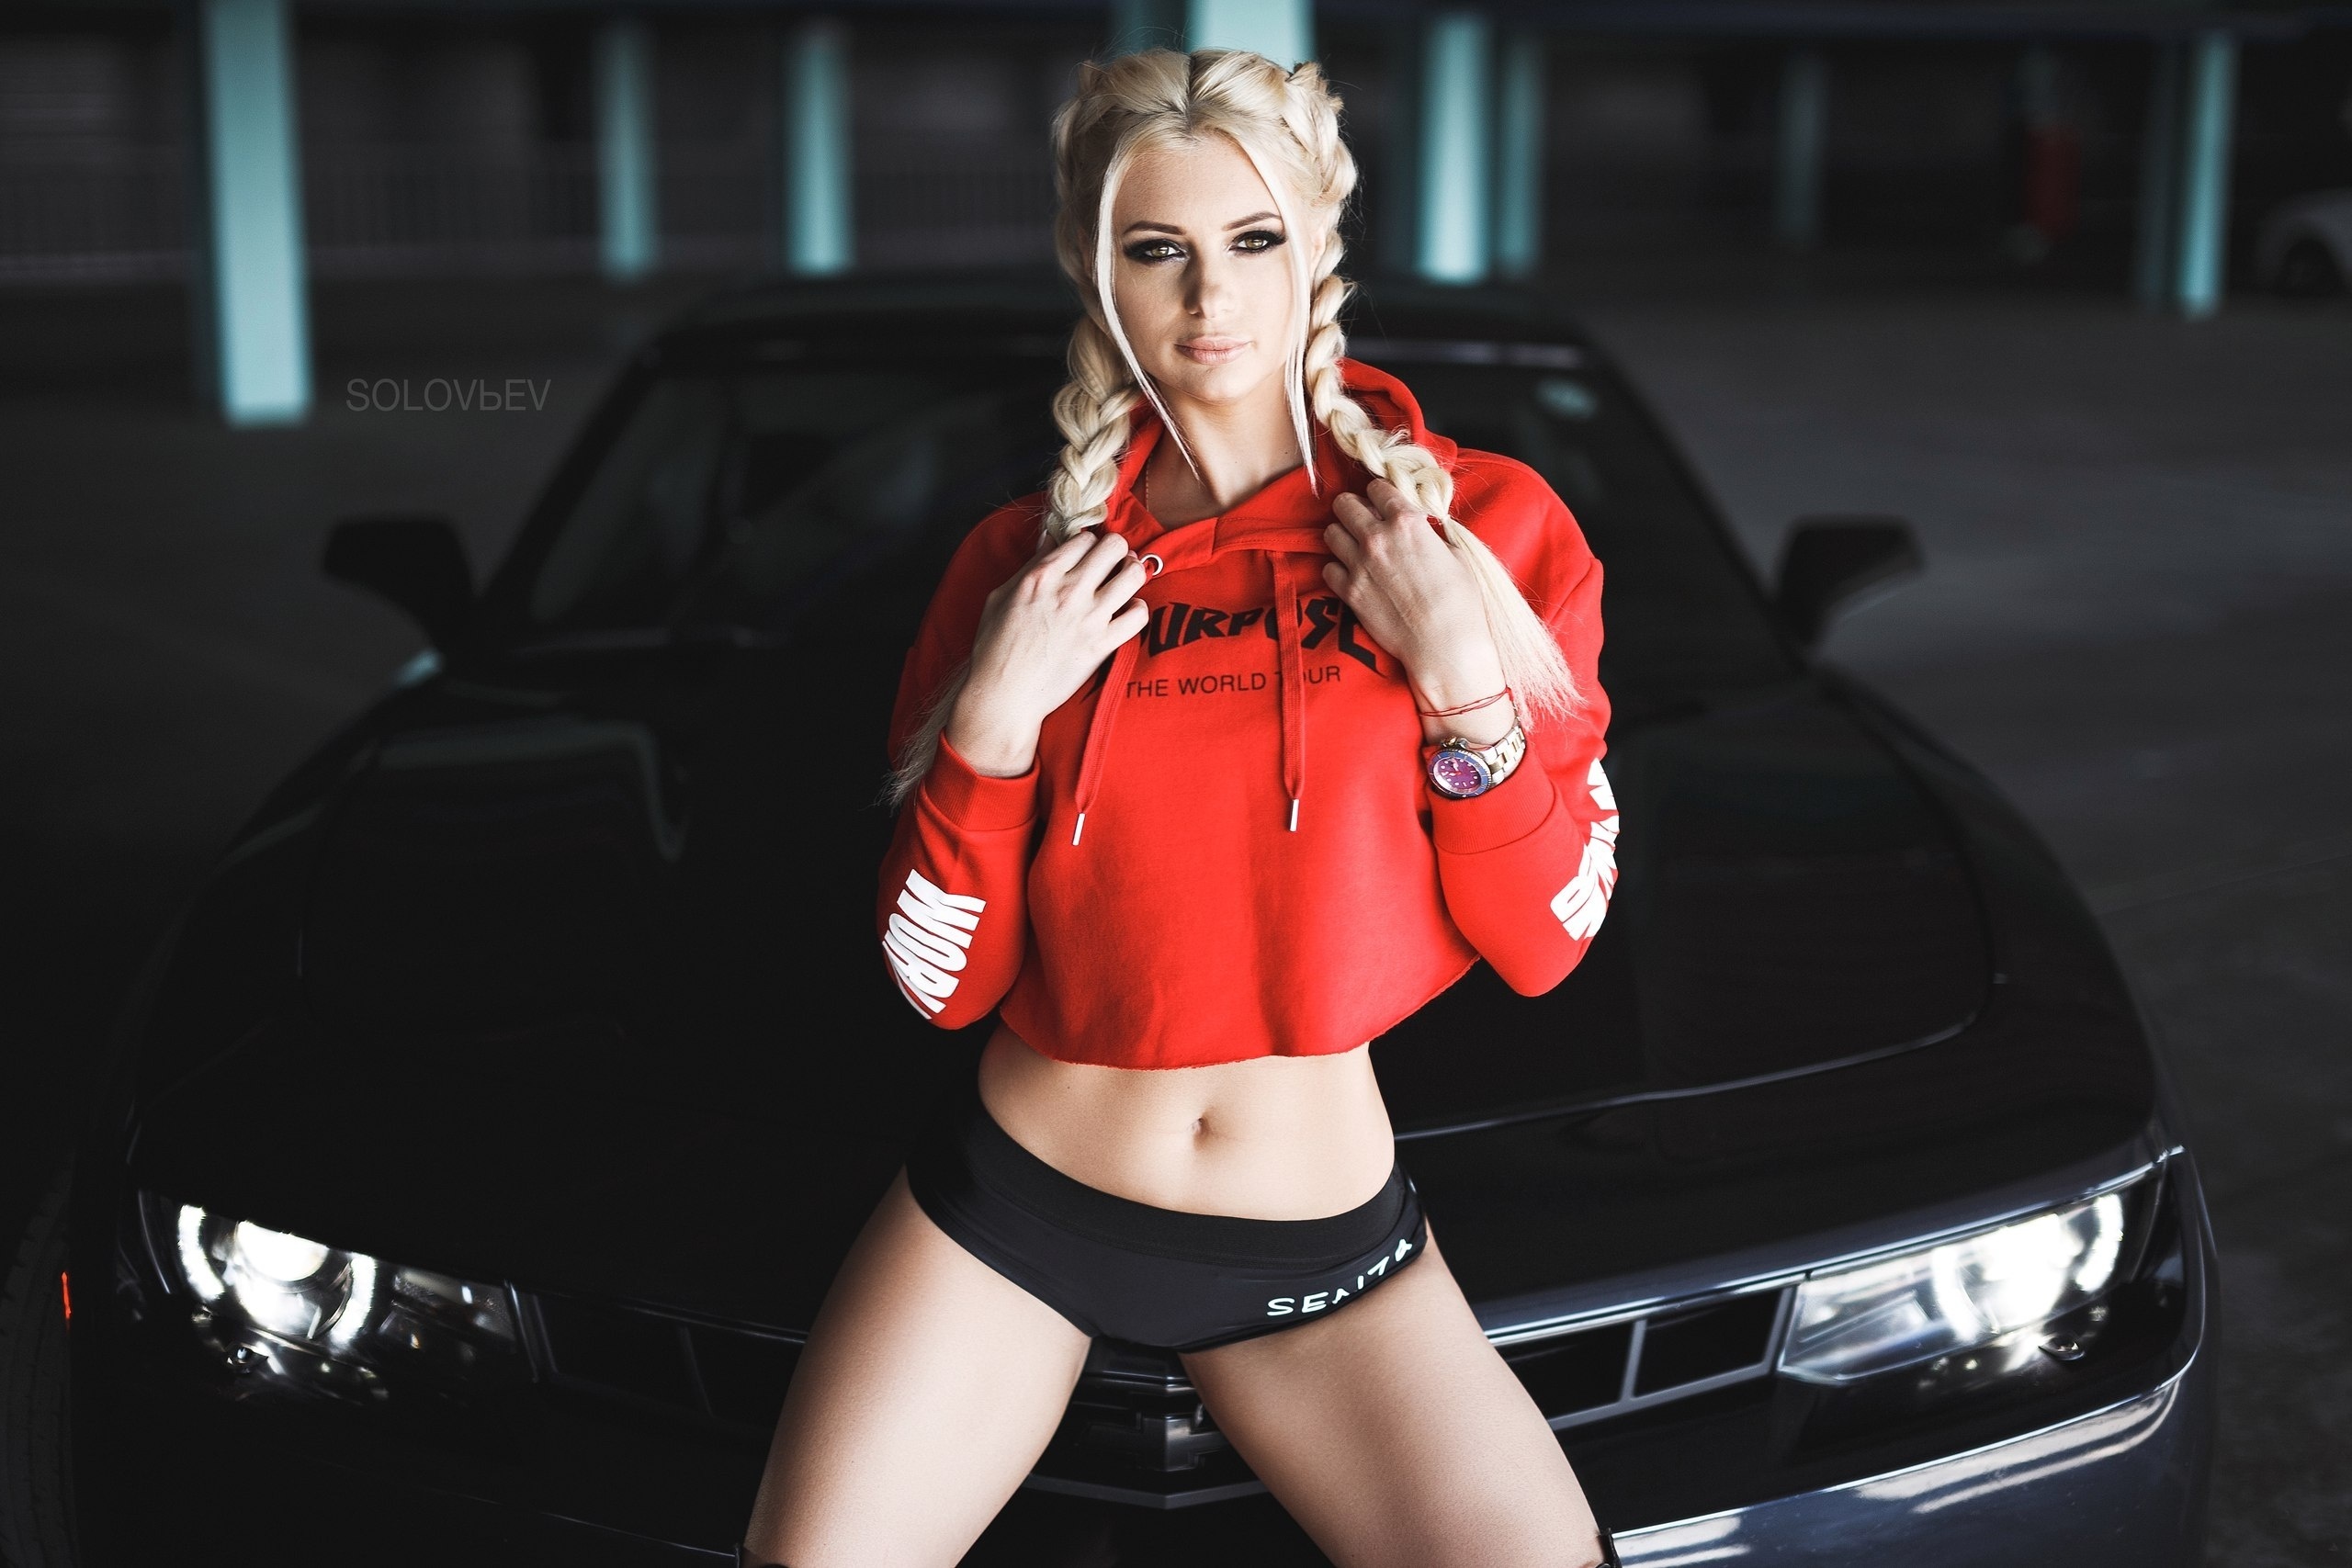 Image: Girl, blonde, person, pigtails, Solovьev, photographer, model, auto, black, Chevrolet, Camaro